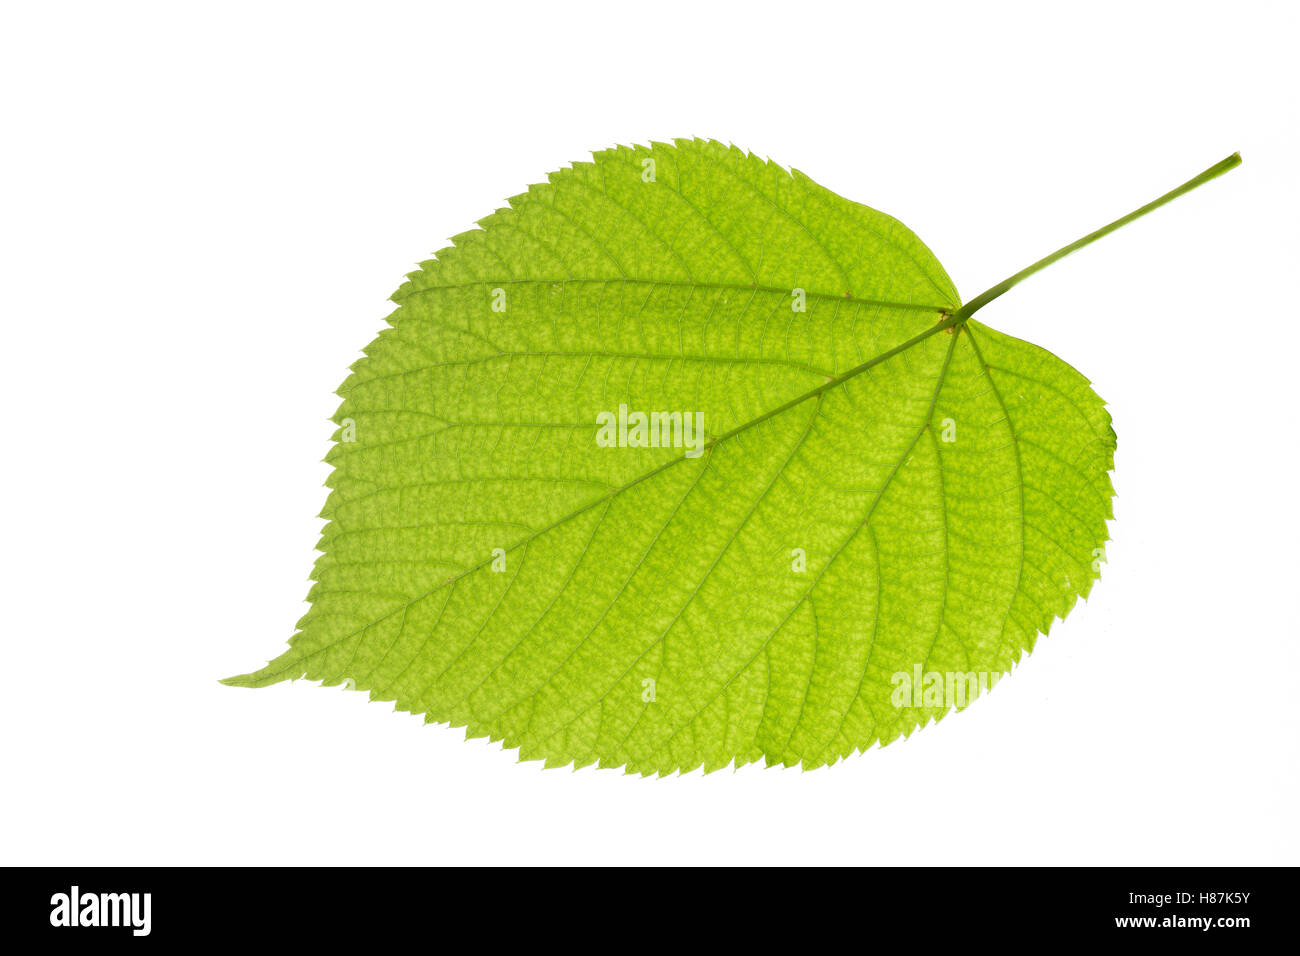 Amerikanische Linde, Tilia americana, American basswood, American linden, Le Tilleul d'Amérique. Blatt, Blätter, leaf, leaves, B Stock Photo